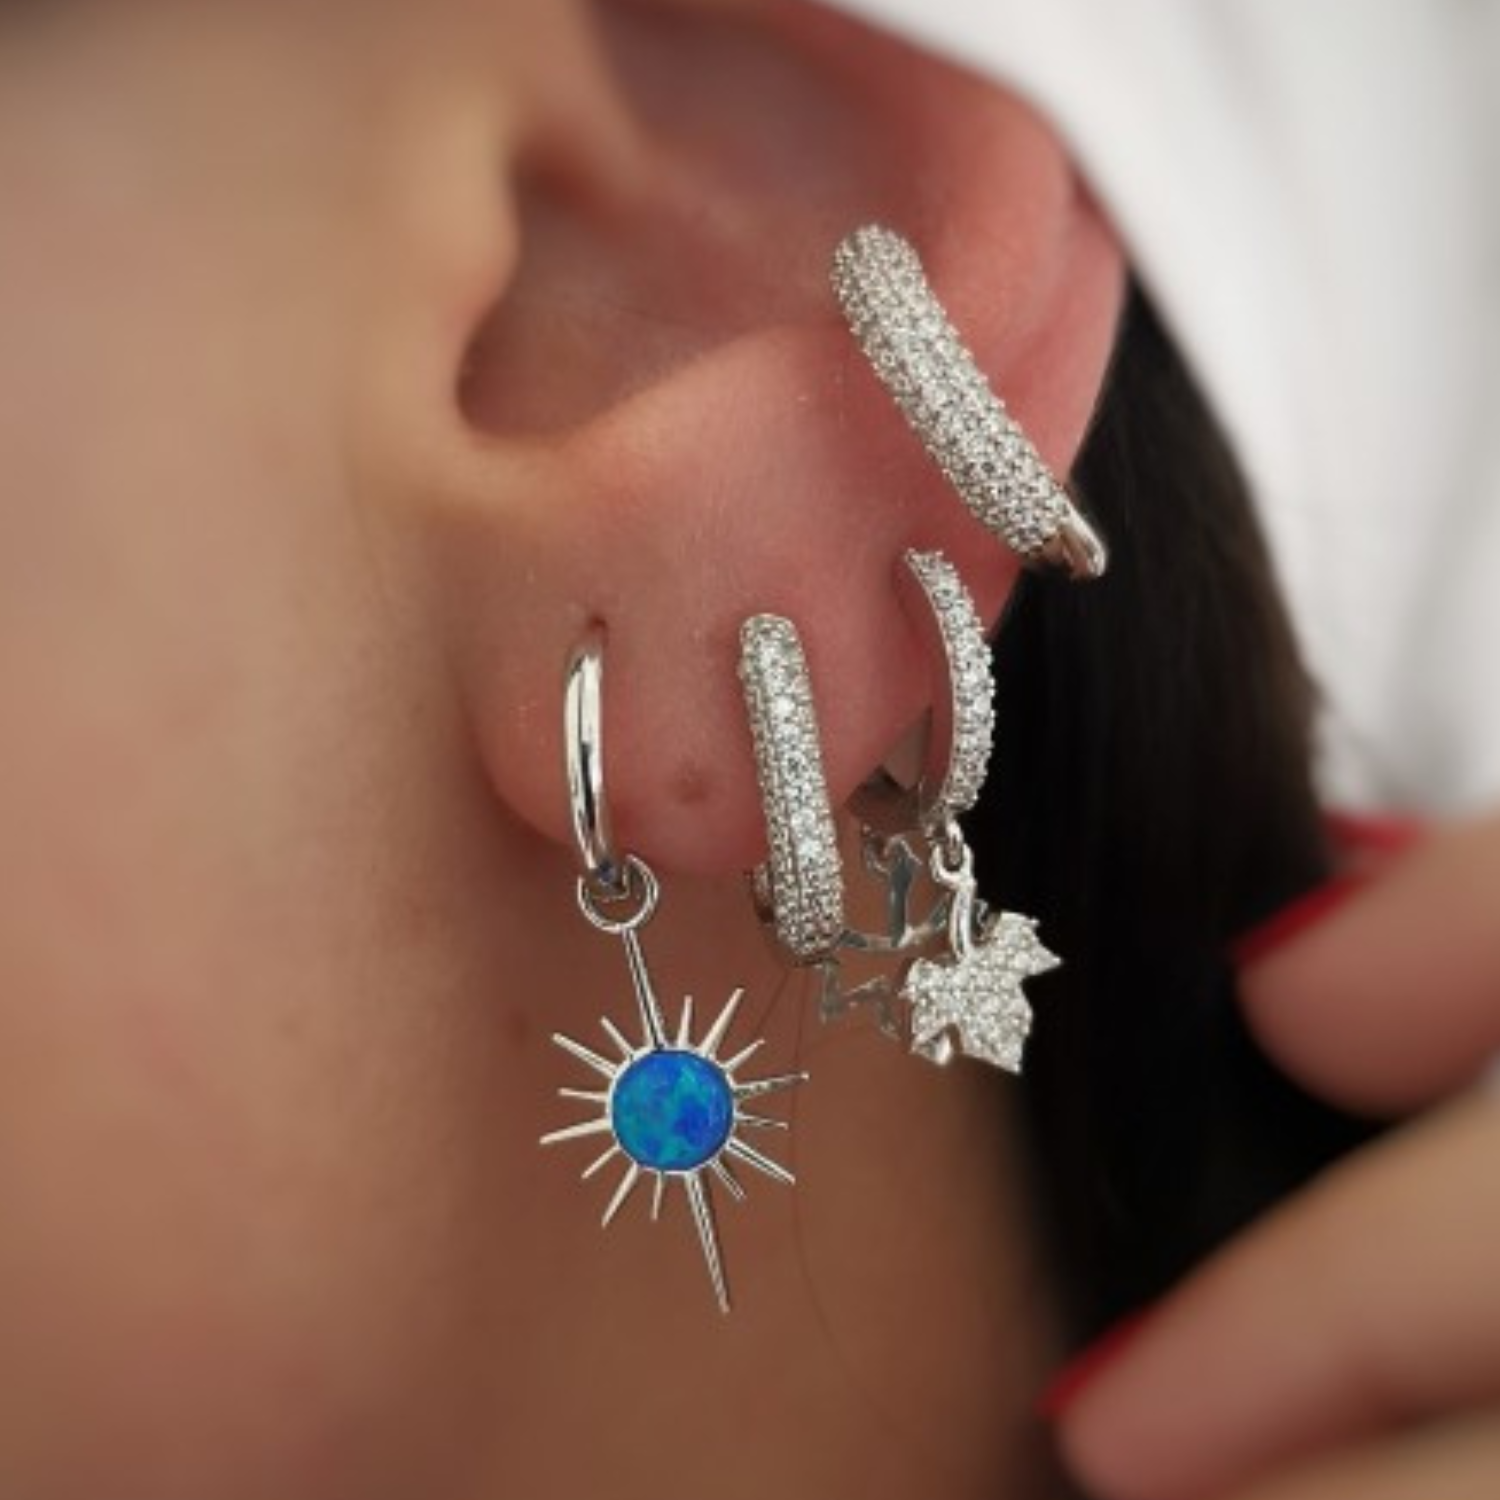 Blue Opal Northernstar Drop Hoop Earring & Necklace Set in Sterling Silver